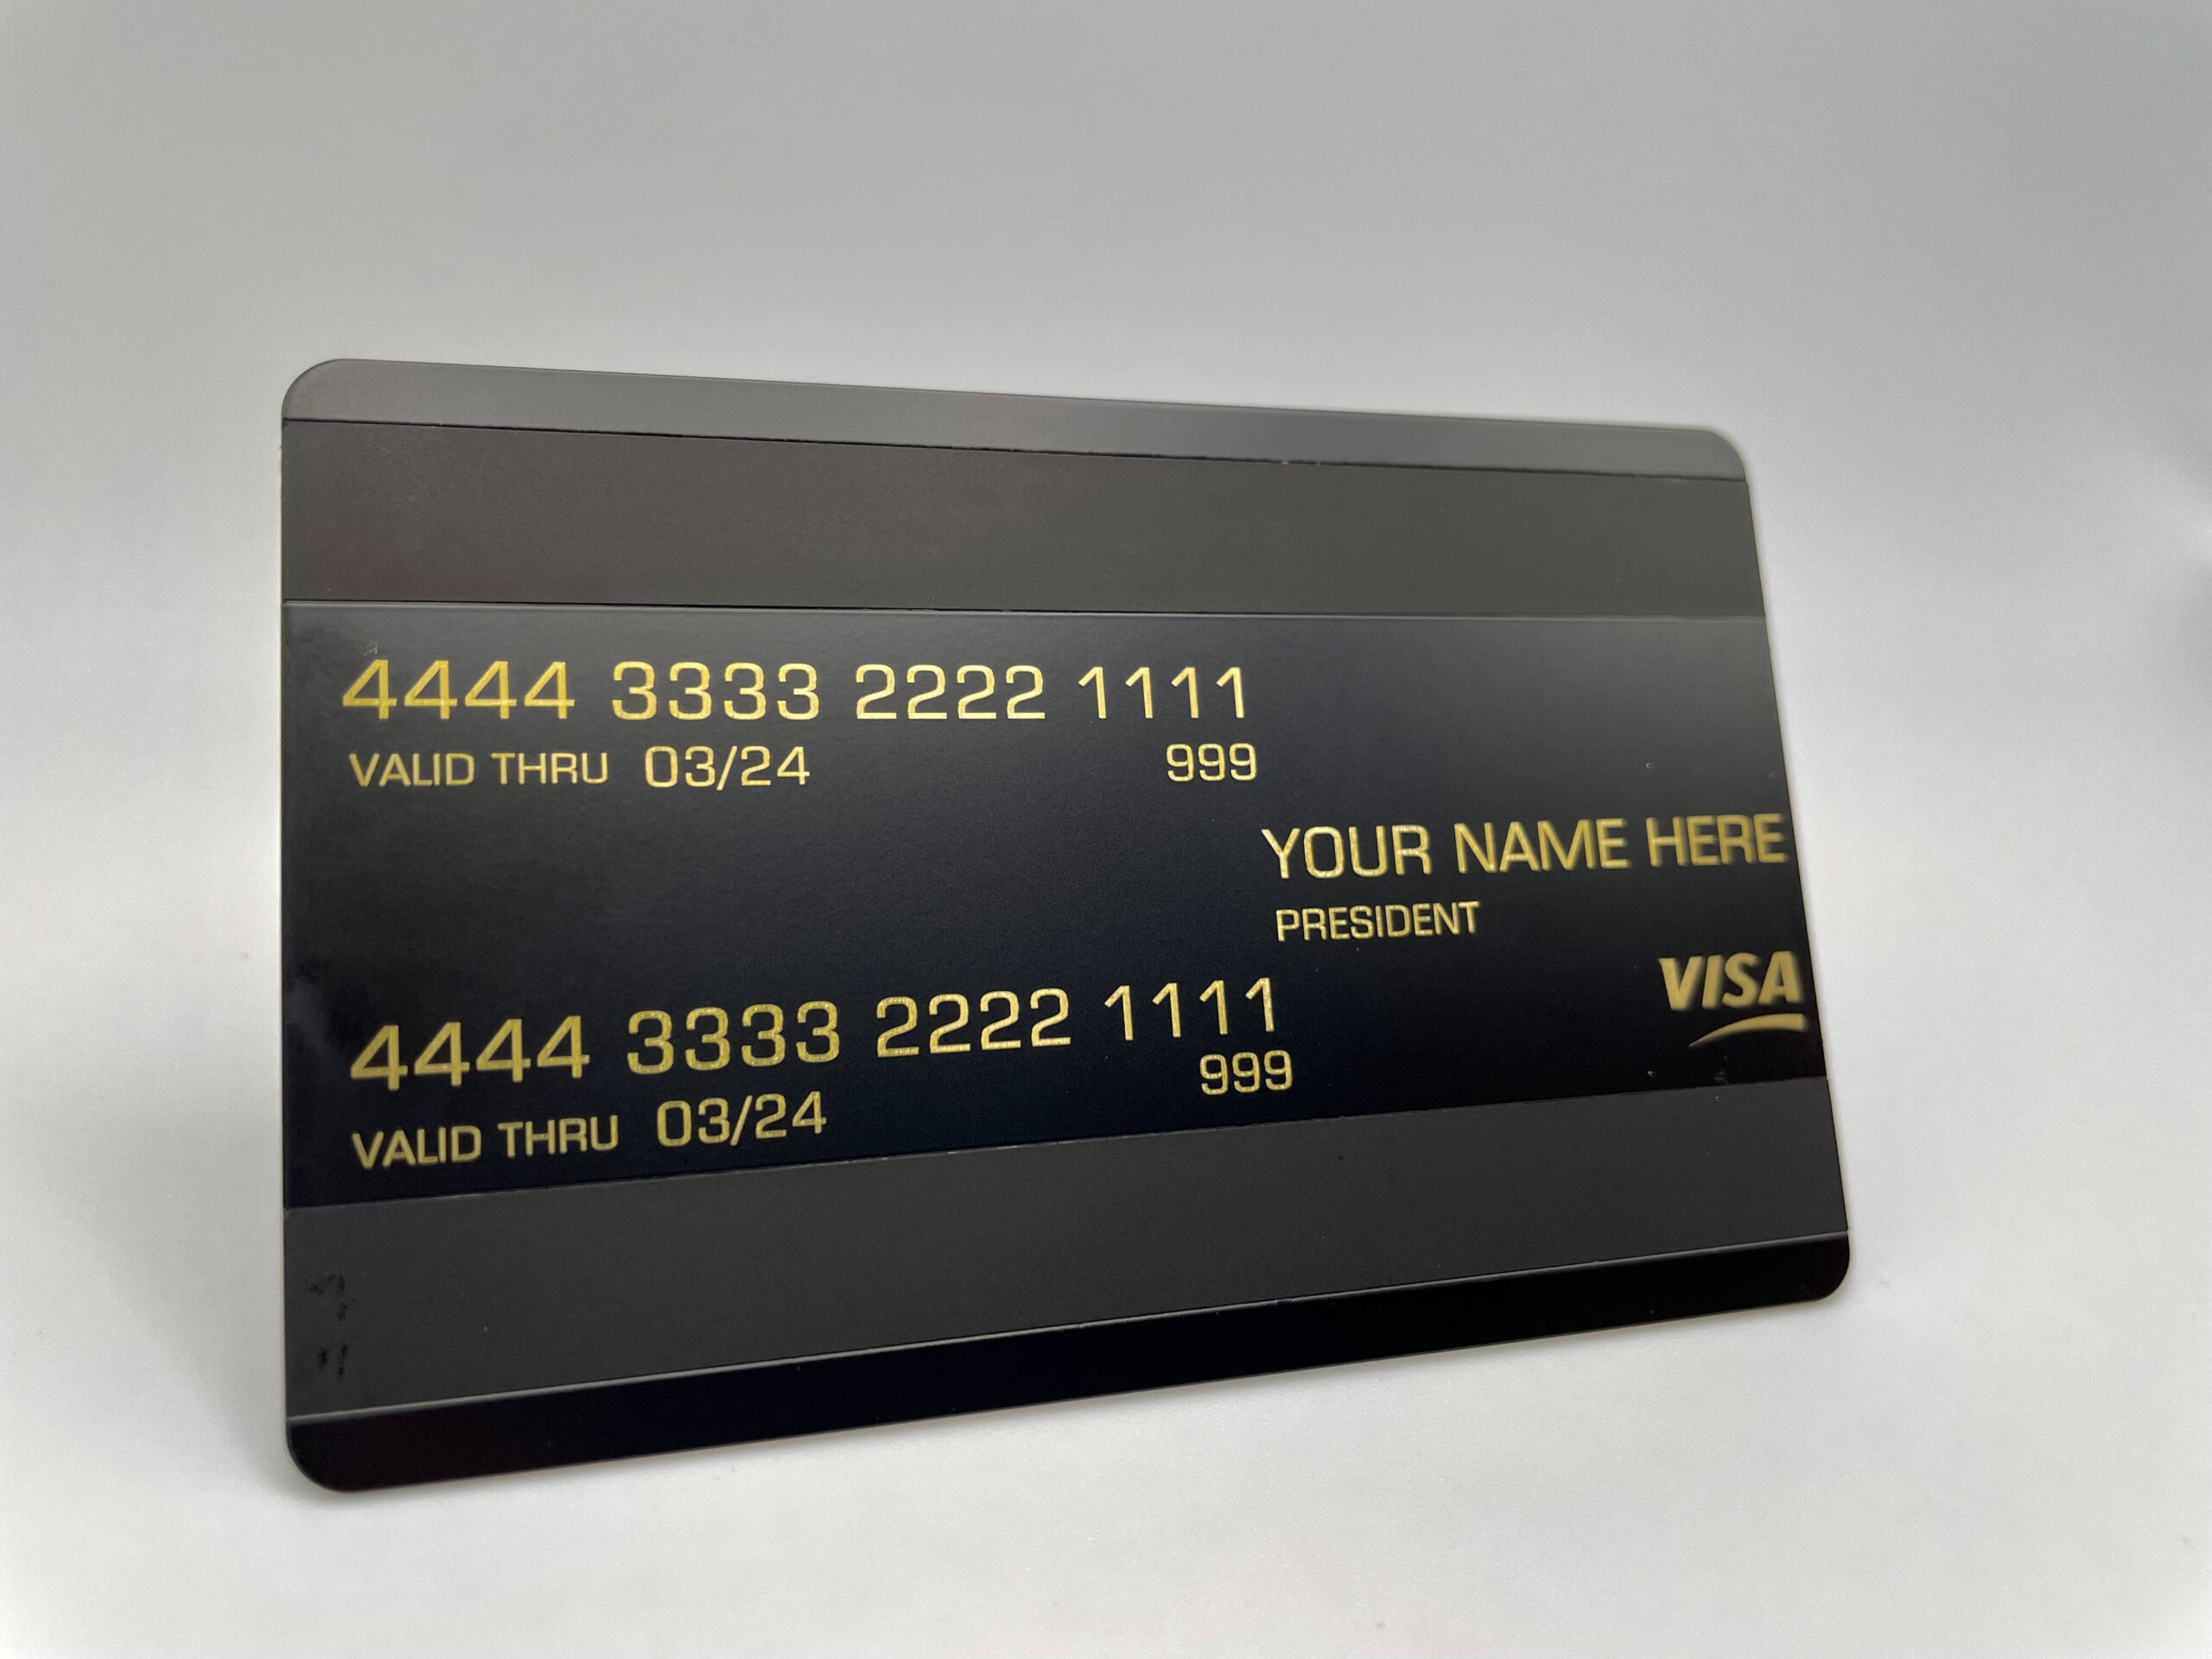 Louis Vuitton - AmEx Credit Card - SUPREME